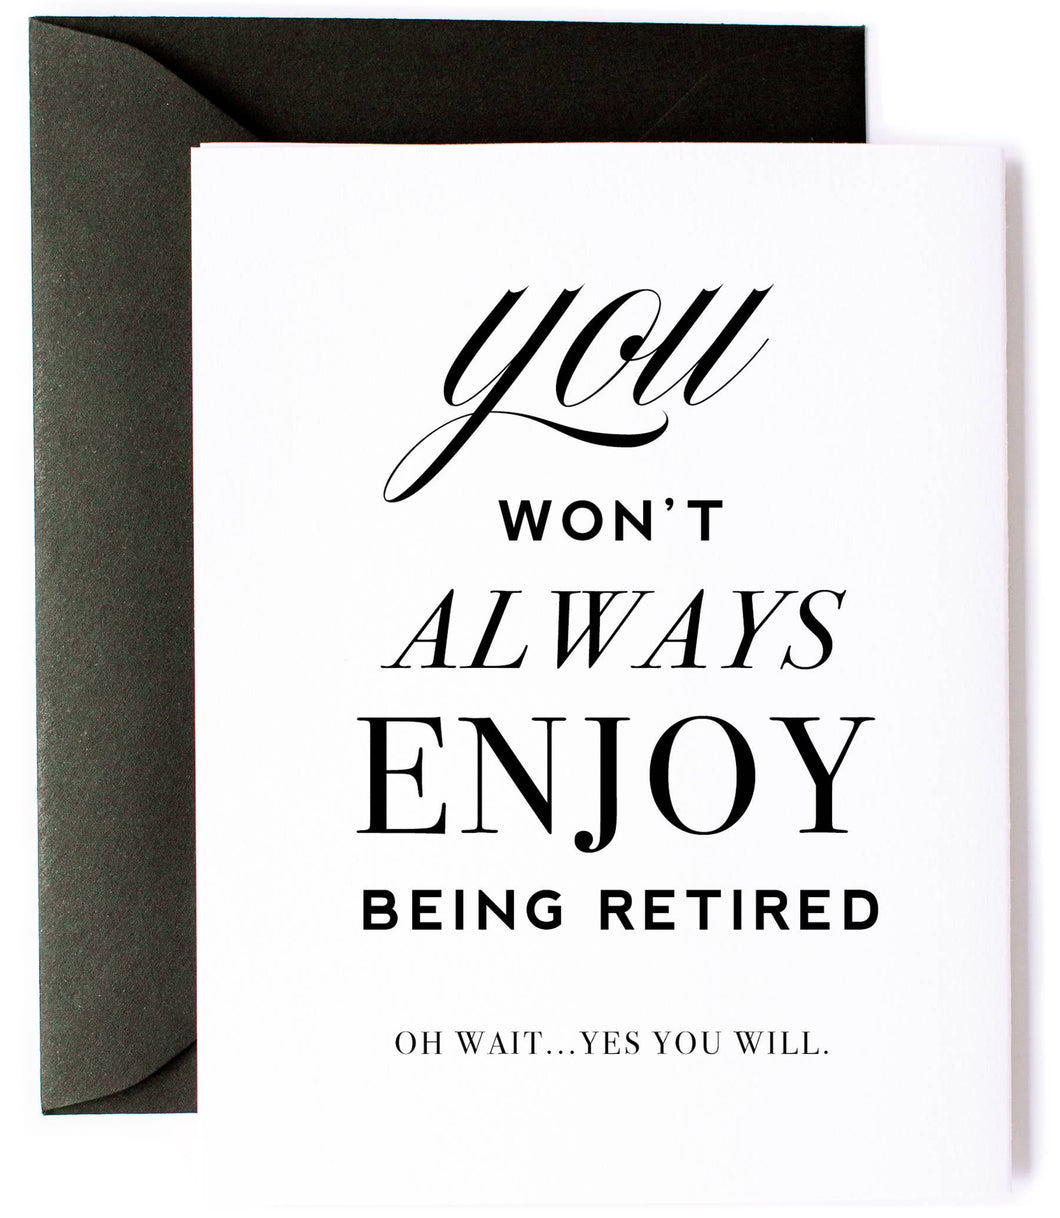 Enjoy Retirement Card